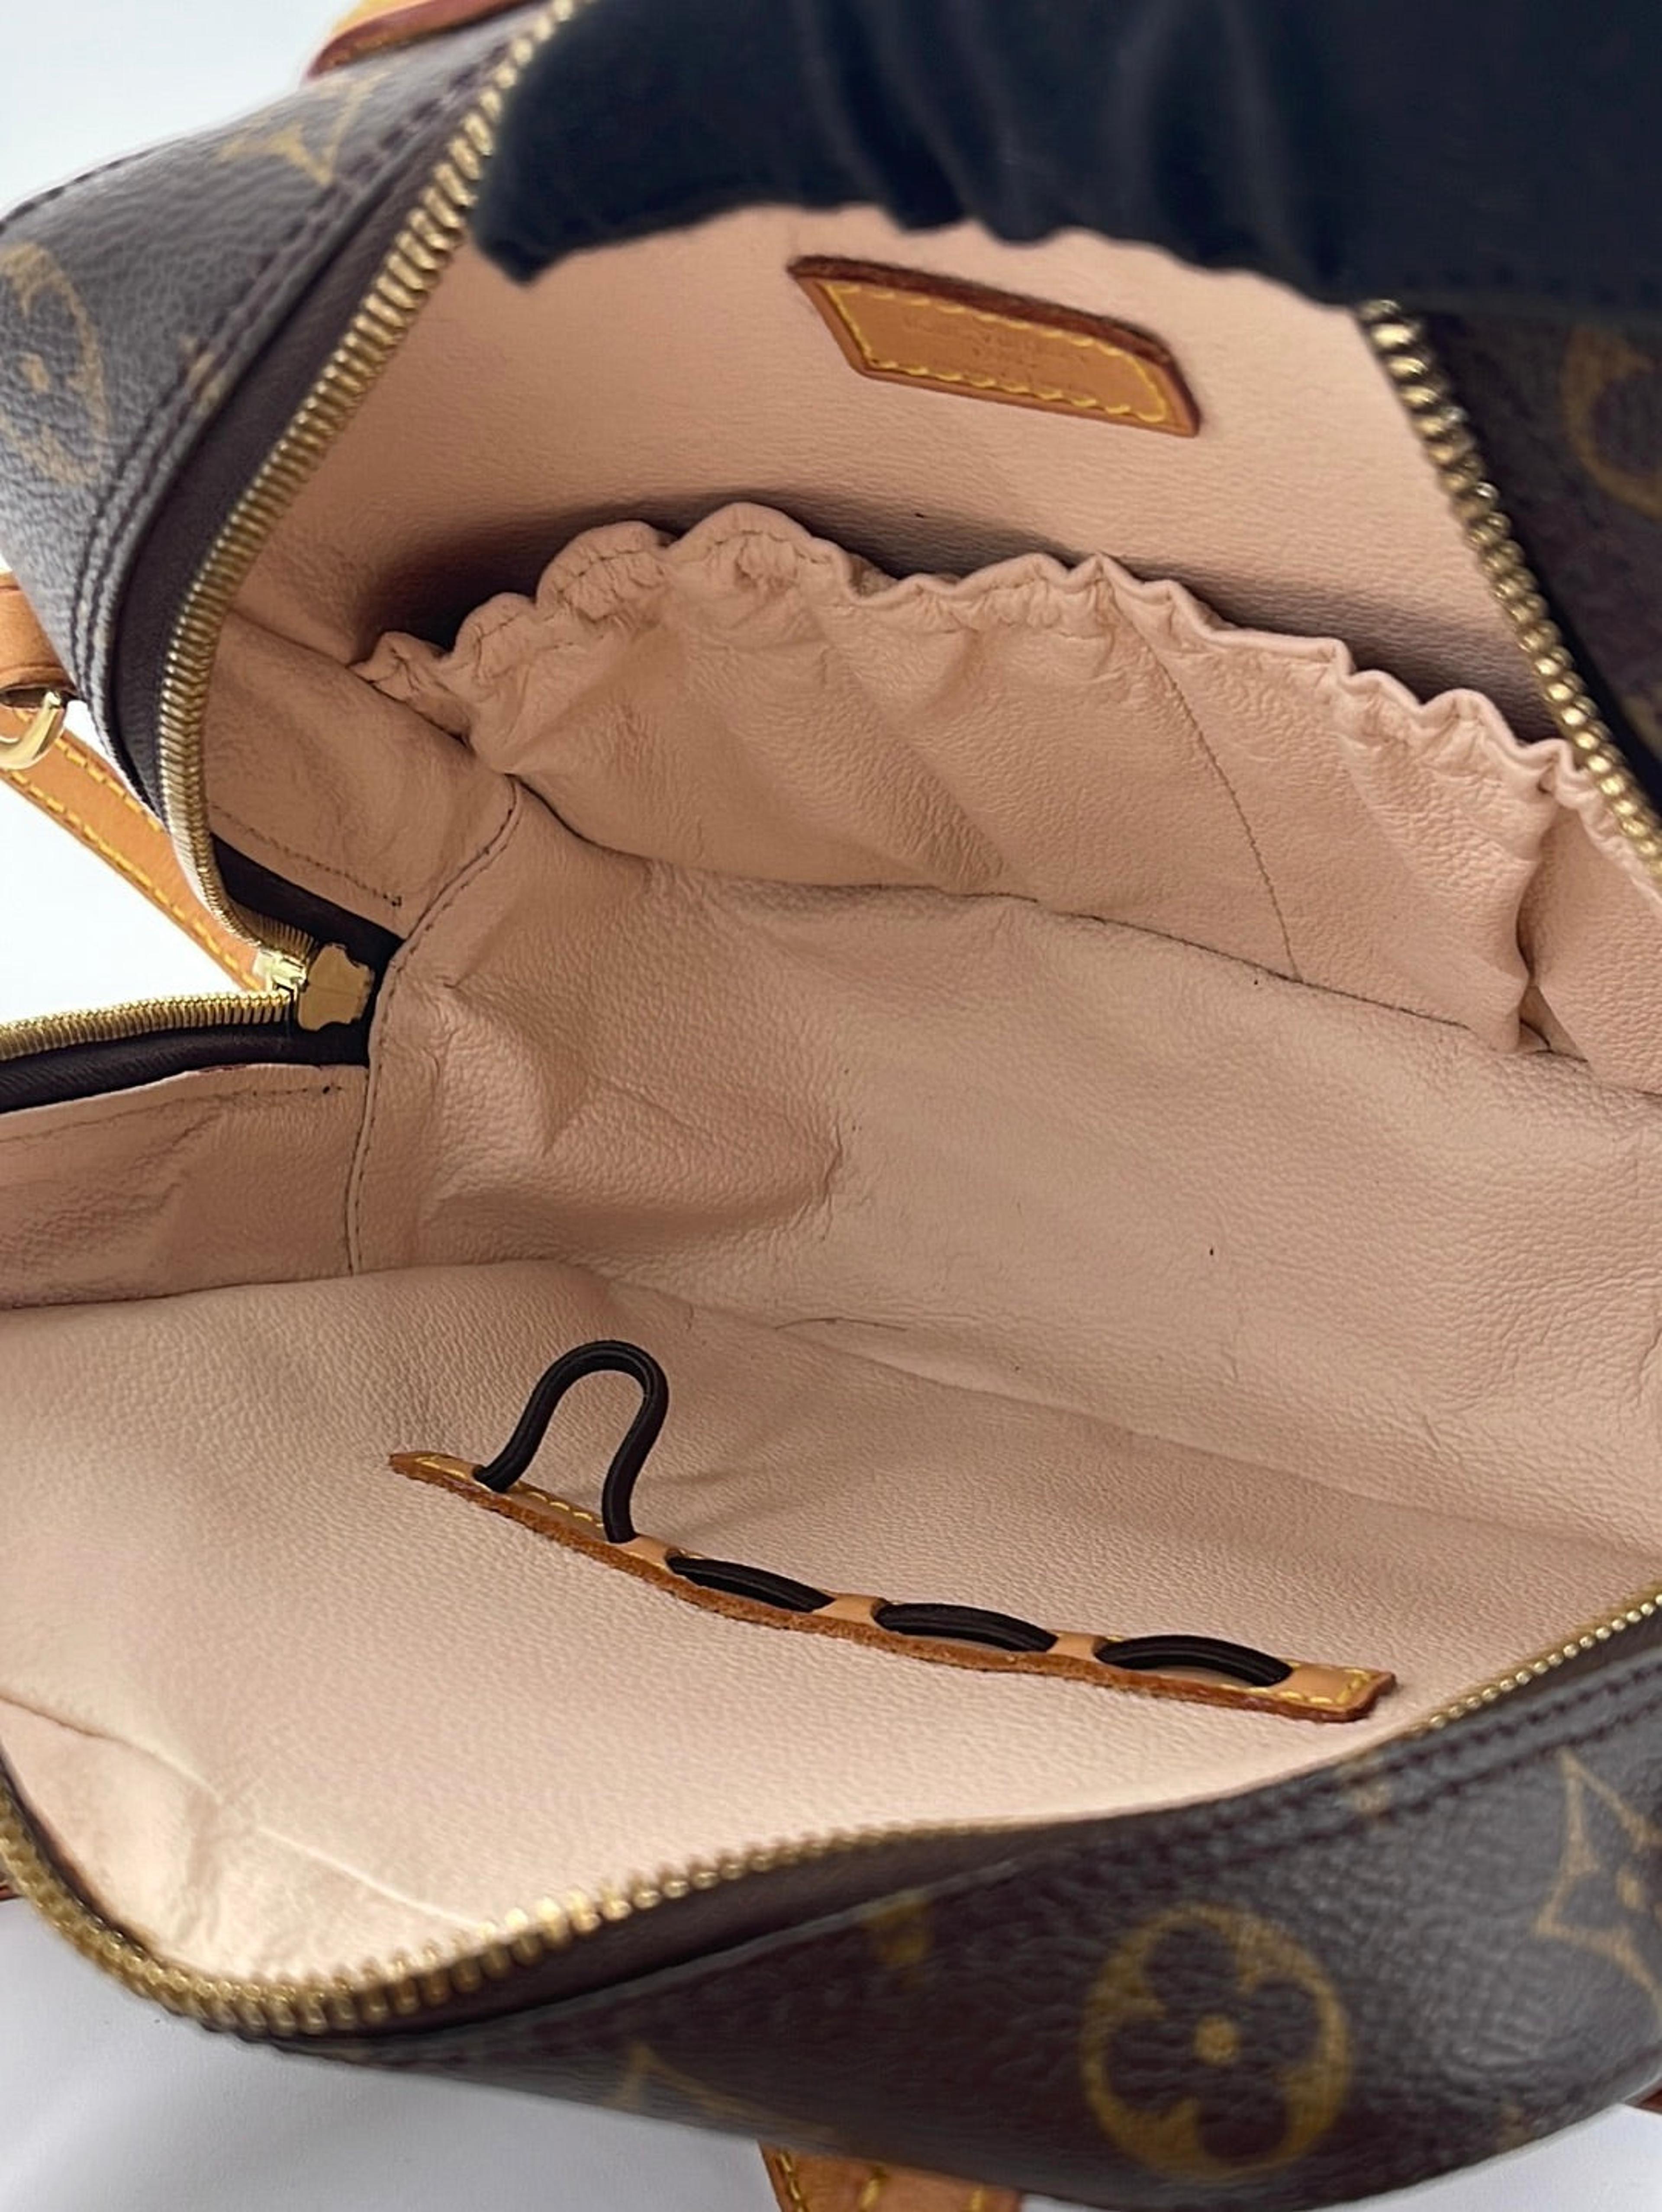 PRELOVED Louis Vuitton Monogram Spontini Hand Shoulder Bag 2way